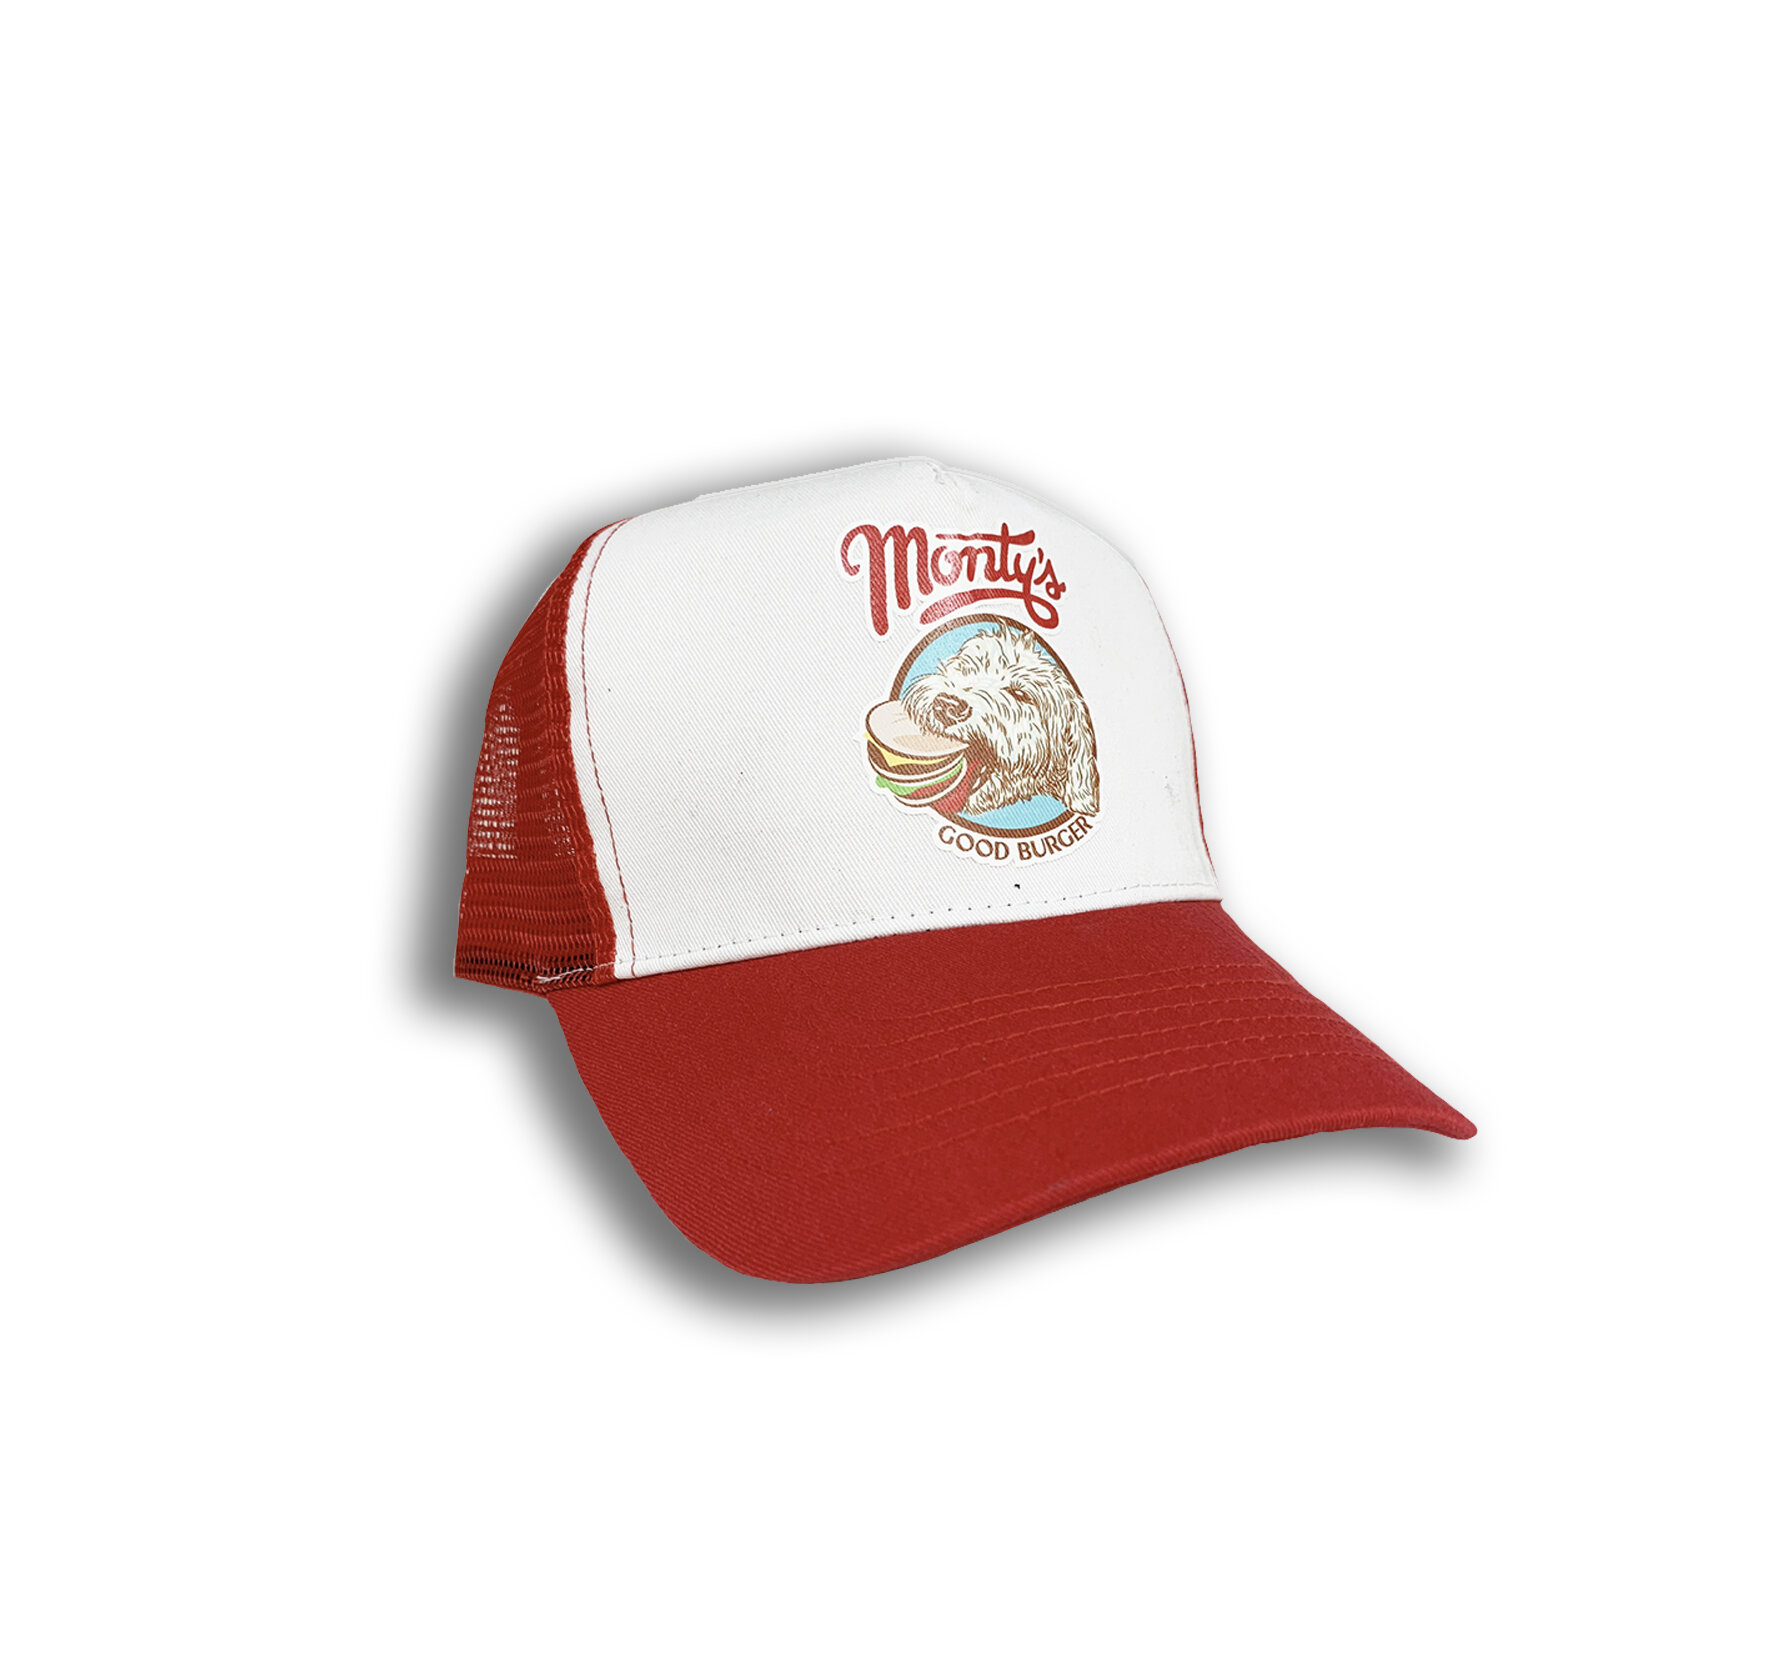 Classic Monty's Trucker Hat (RED) 🦊 — Monty's Good Burger